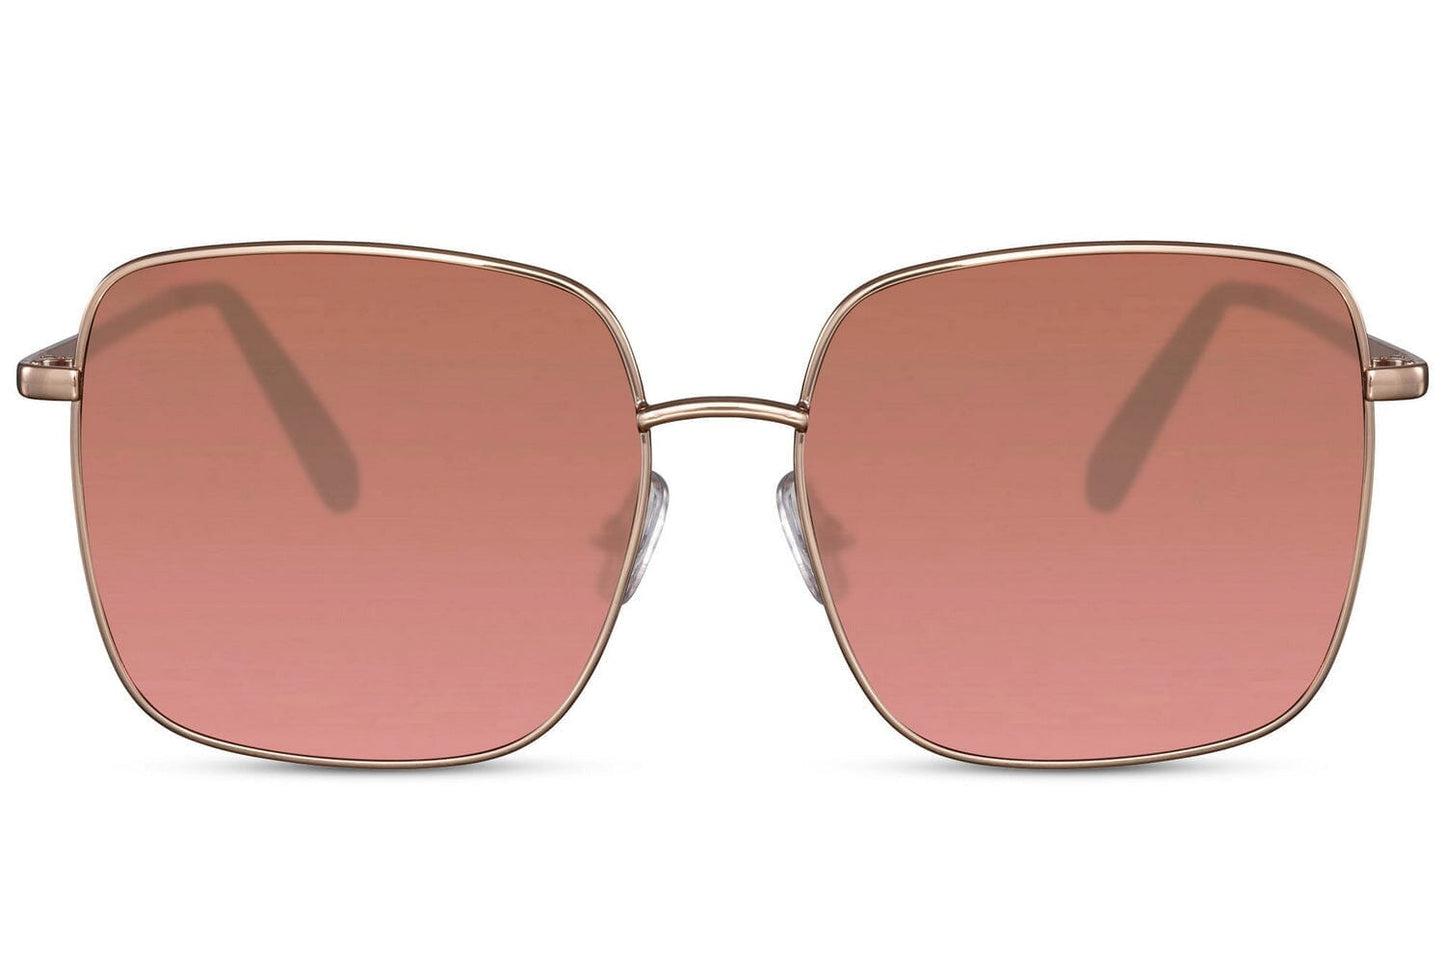 Gold frame sunglasses. Brown lenses. Gold frames.  Sqaure UV400 protected.